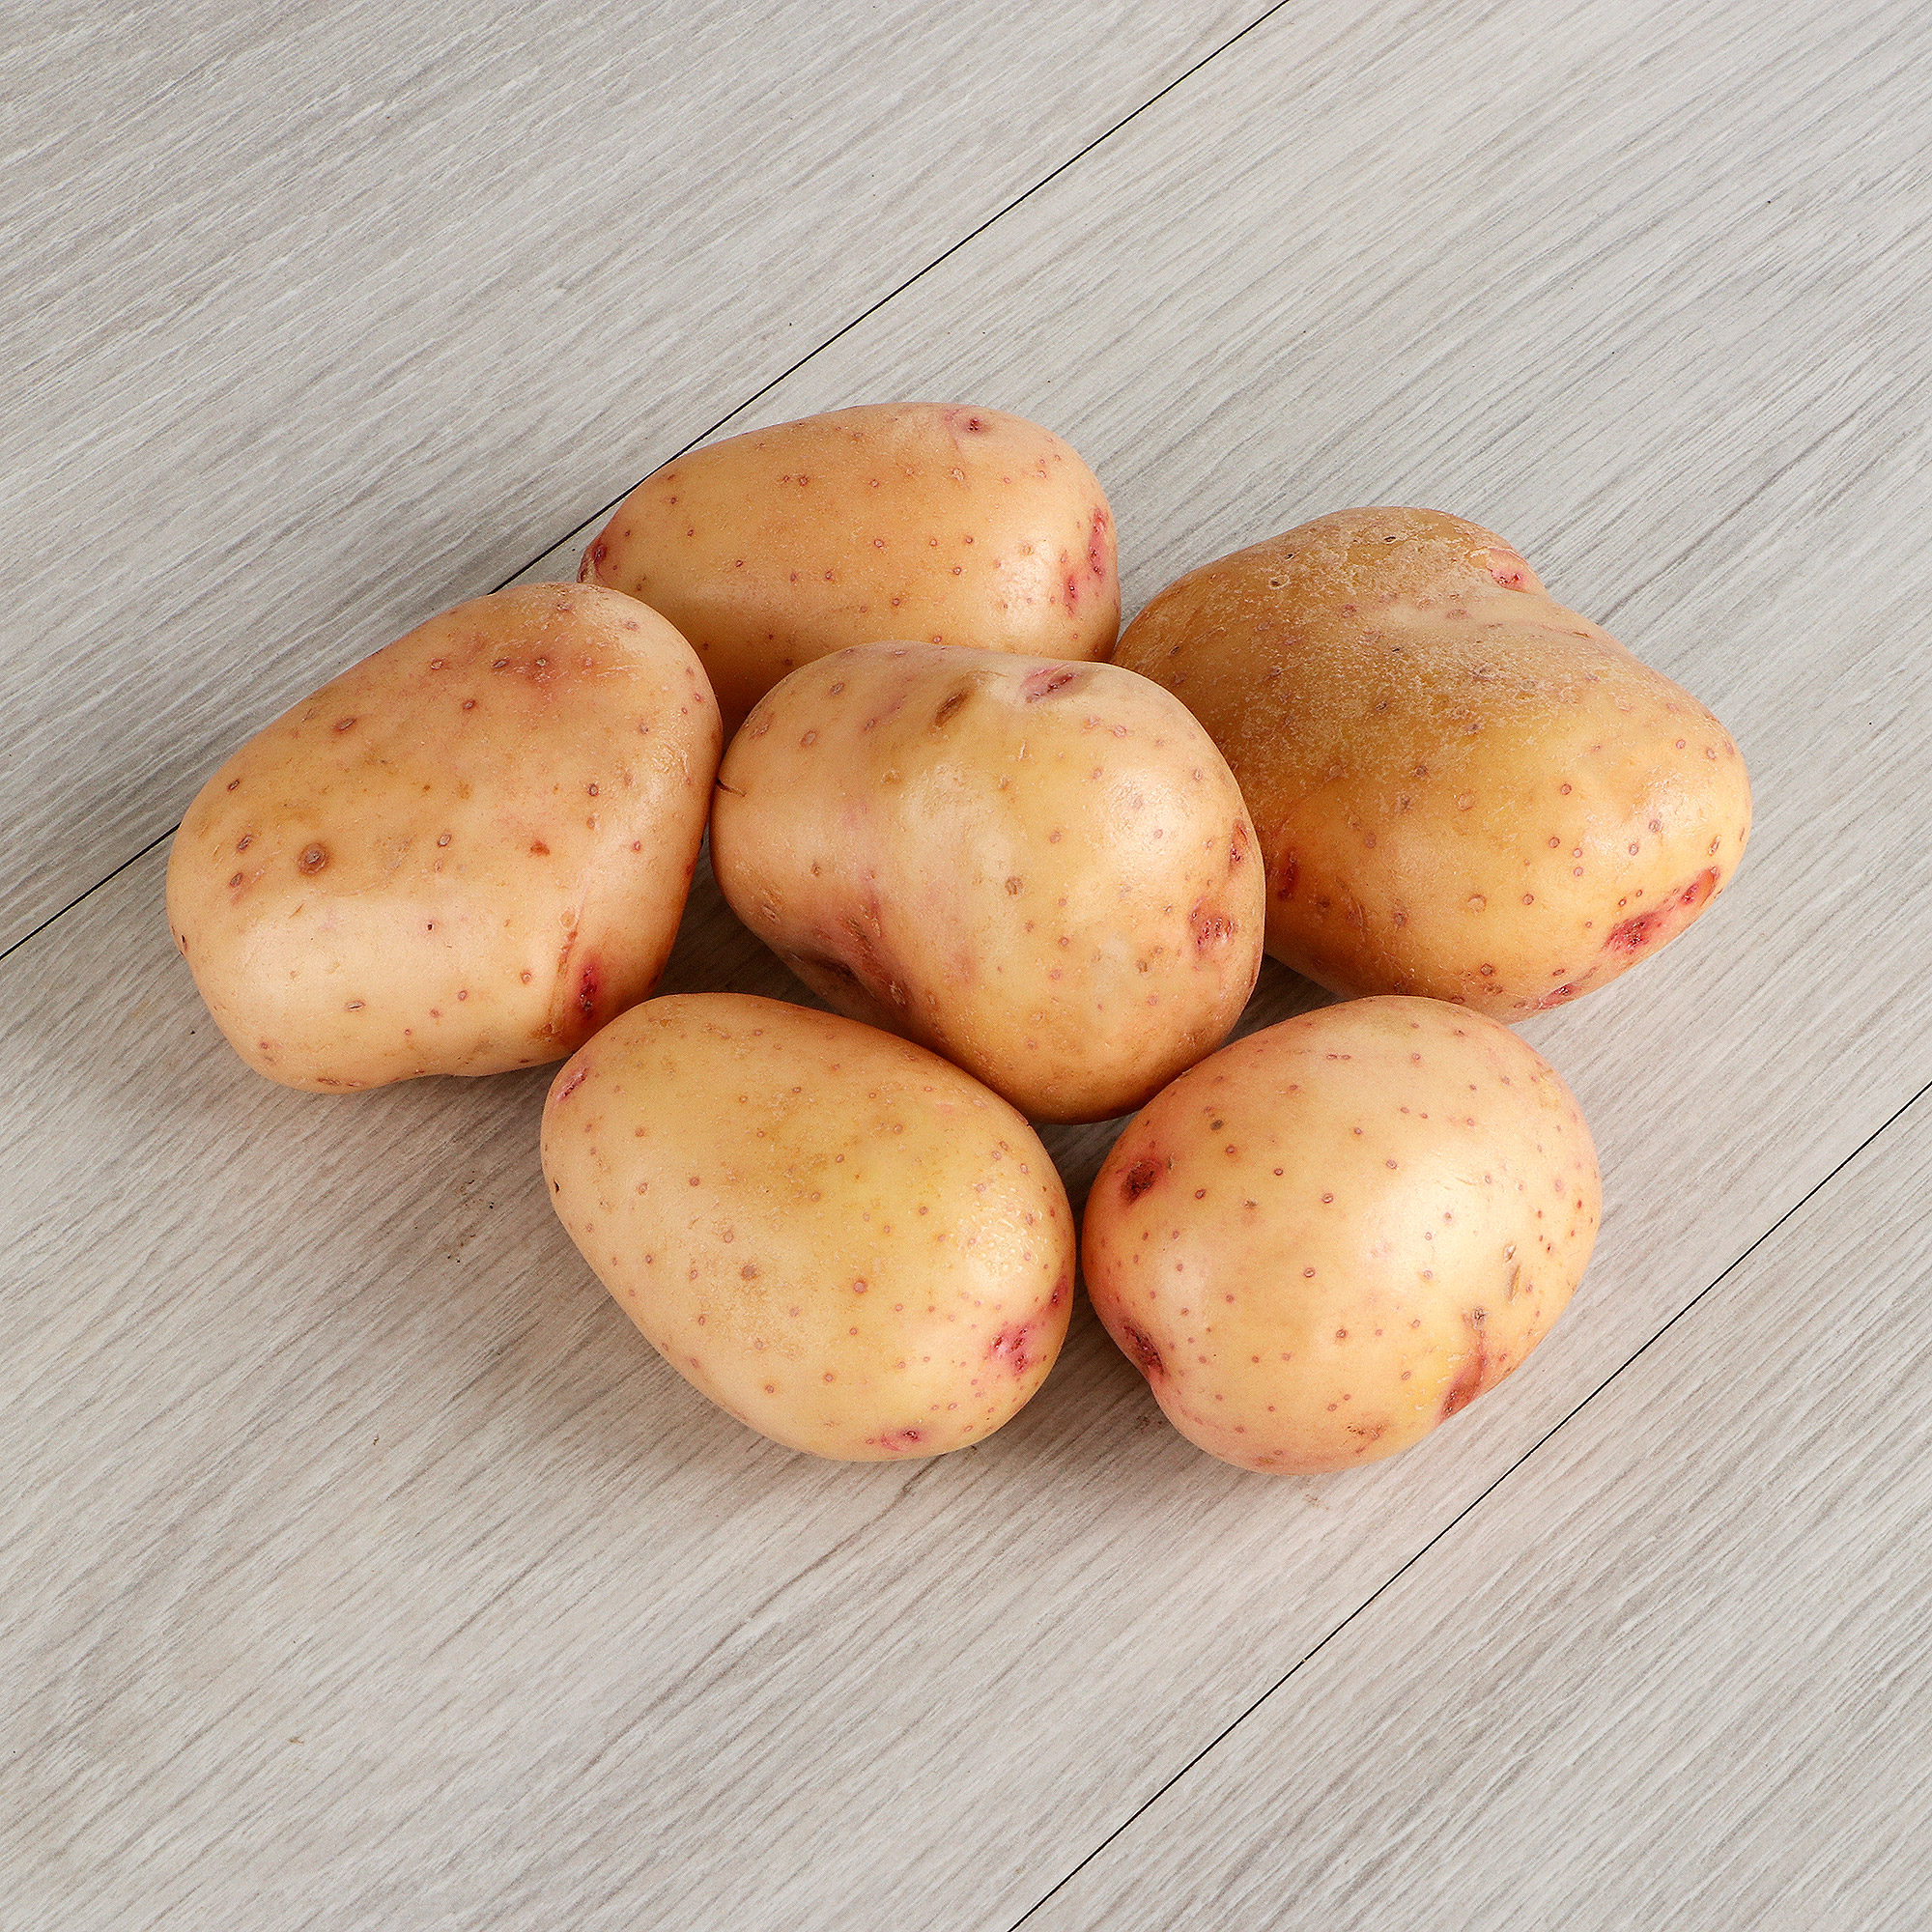 Картофель синеглазка купить. Семена картофеля Синеглазка. Картофель Синеглазка элита. Картофель семенной Синеглазка. Сорт картофеля Синеглазка (Ганнибал).